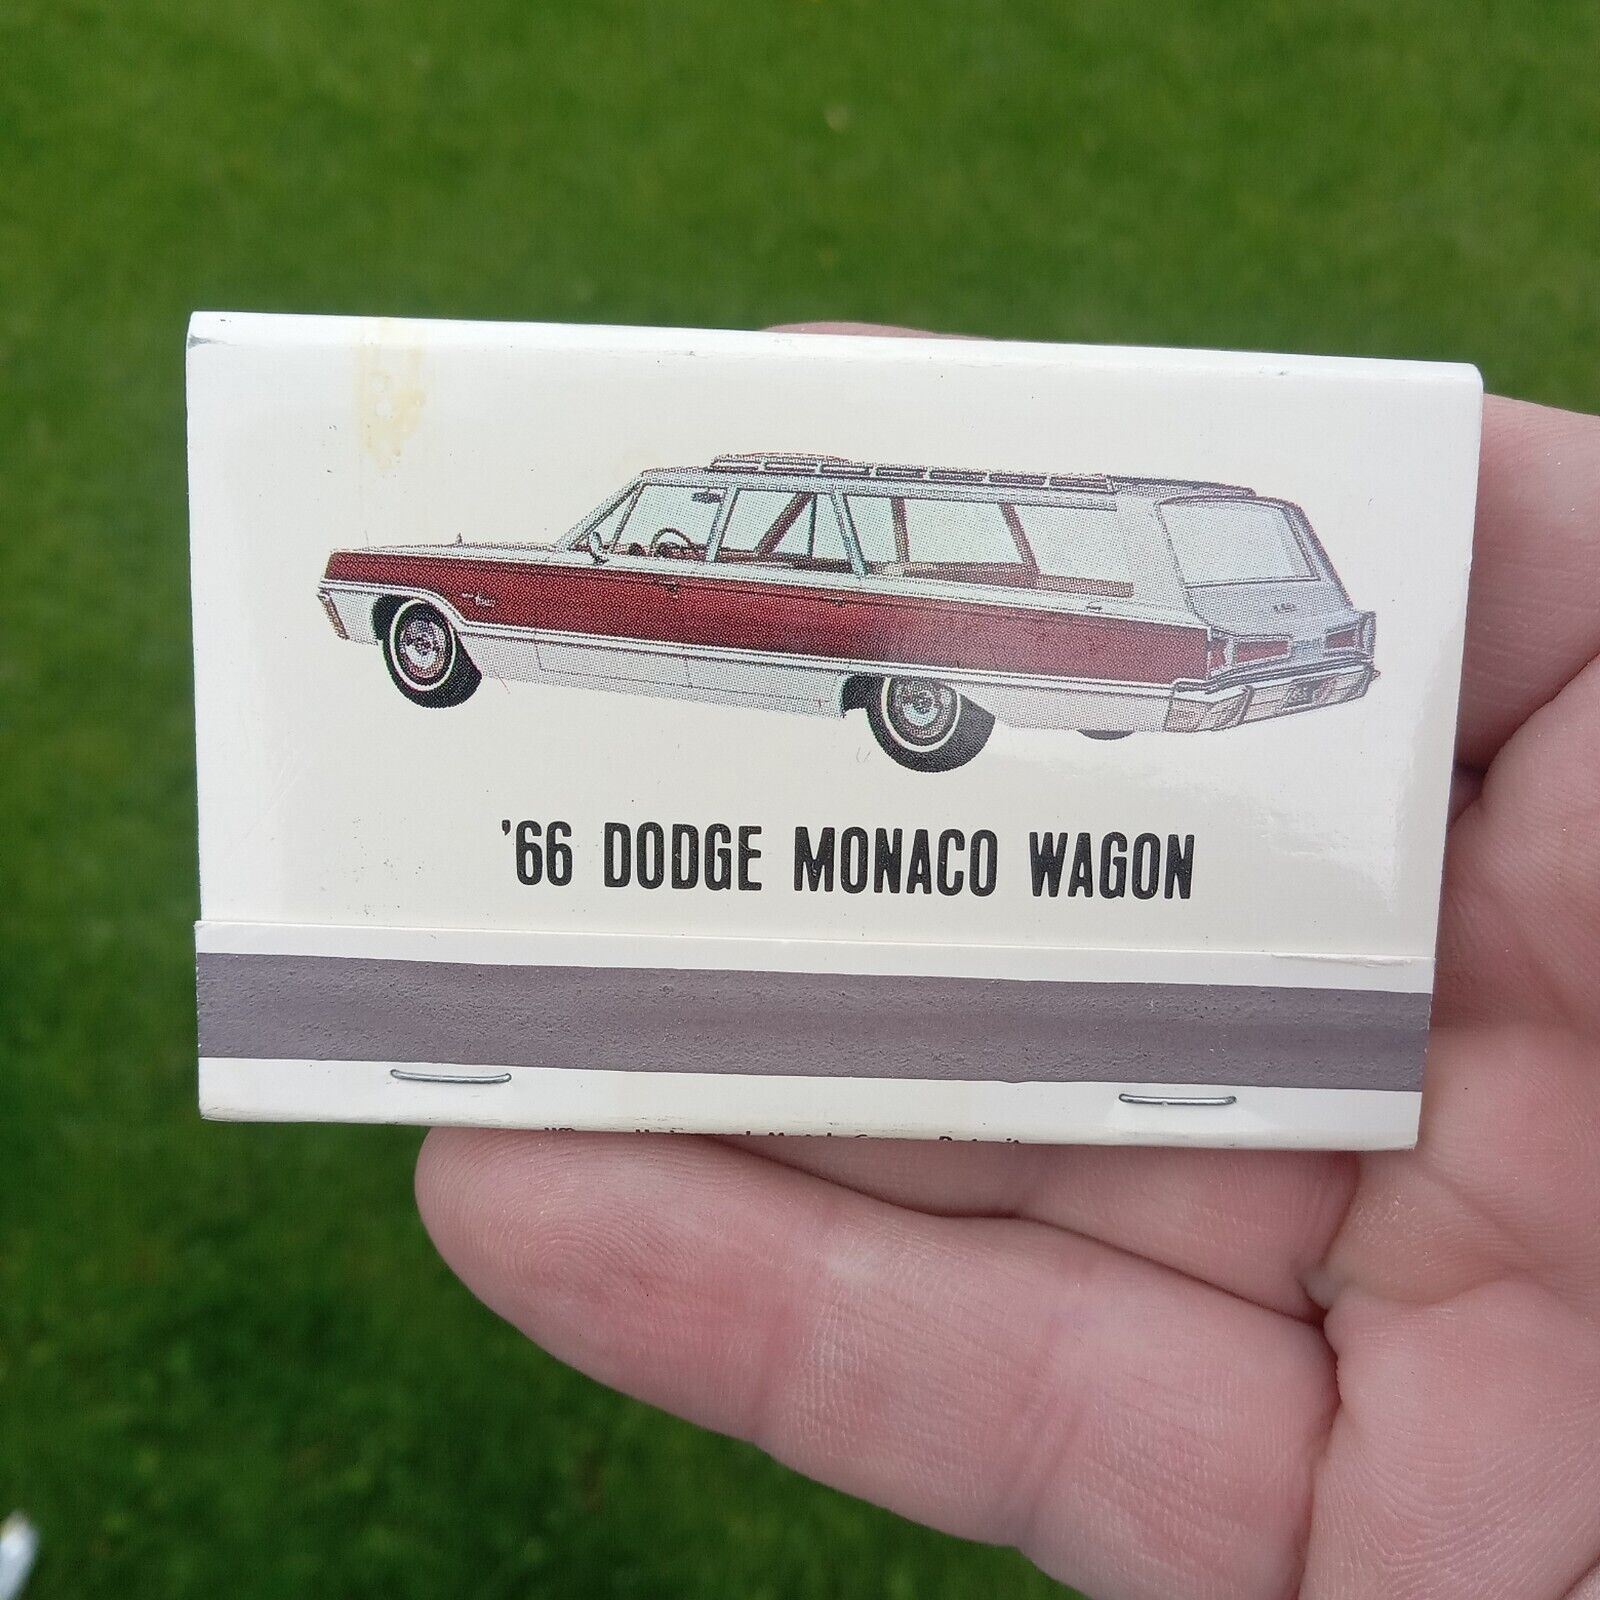 Vintage 1966 Dodge Monaco Wagon - Coronet 440 Wagon Matchbook